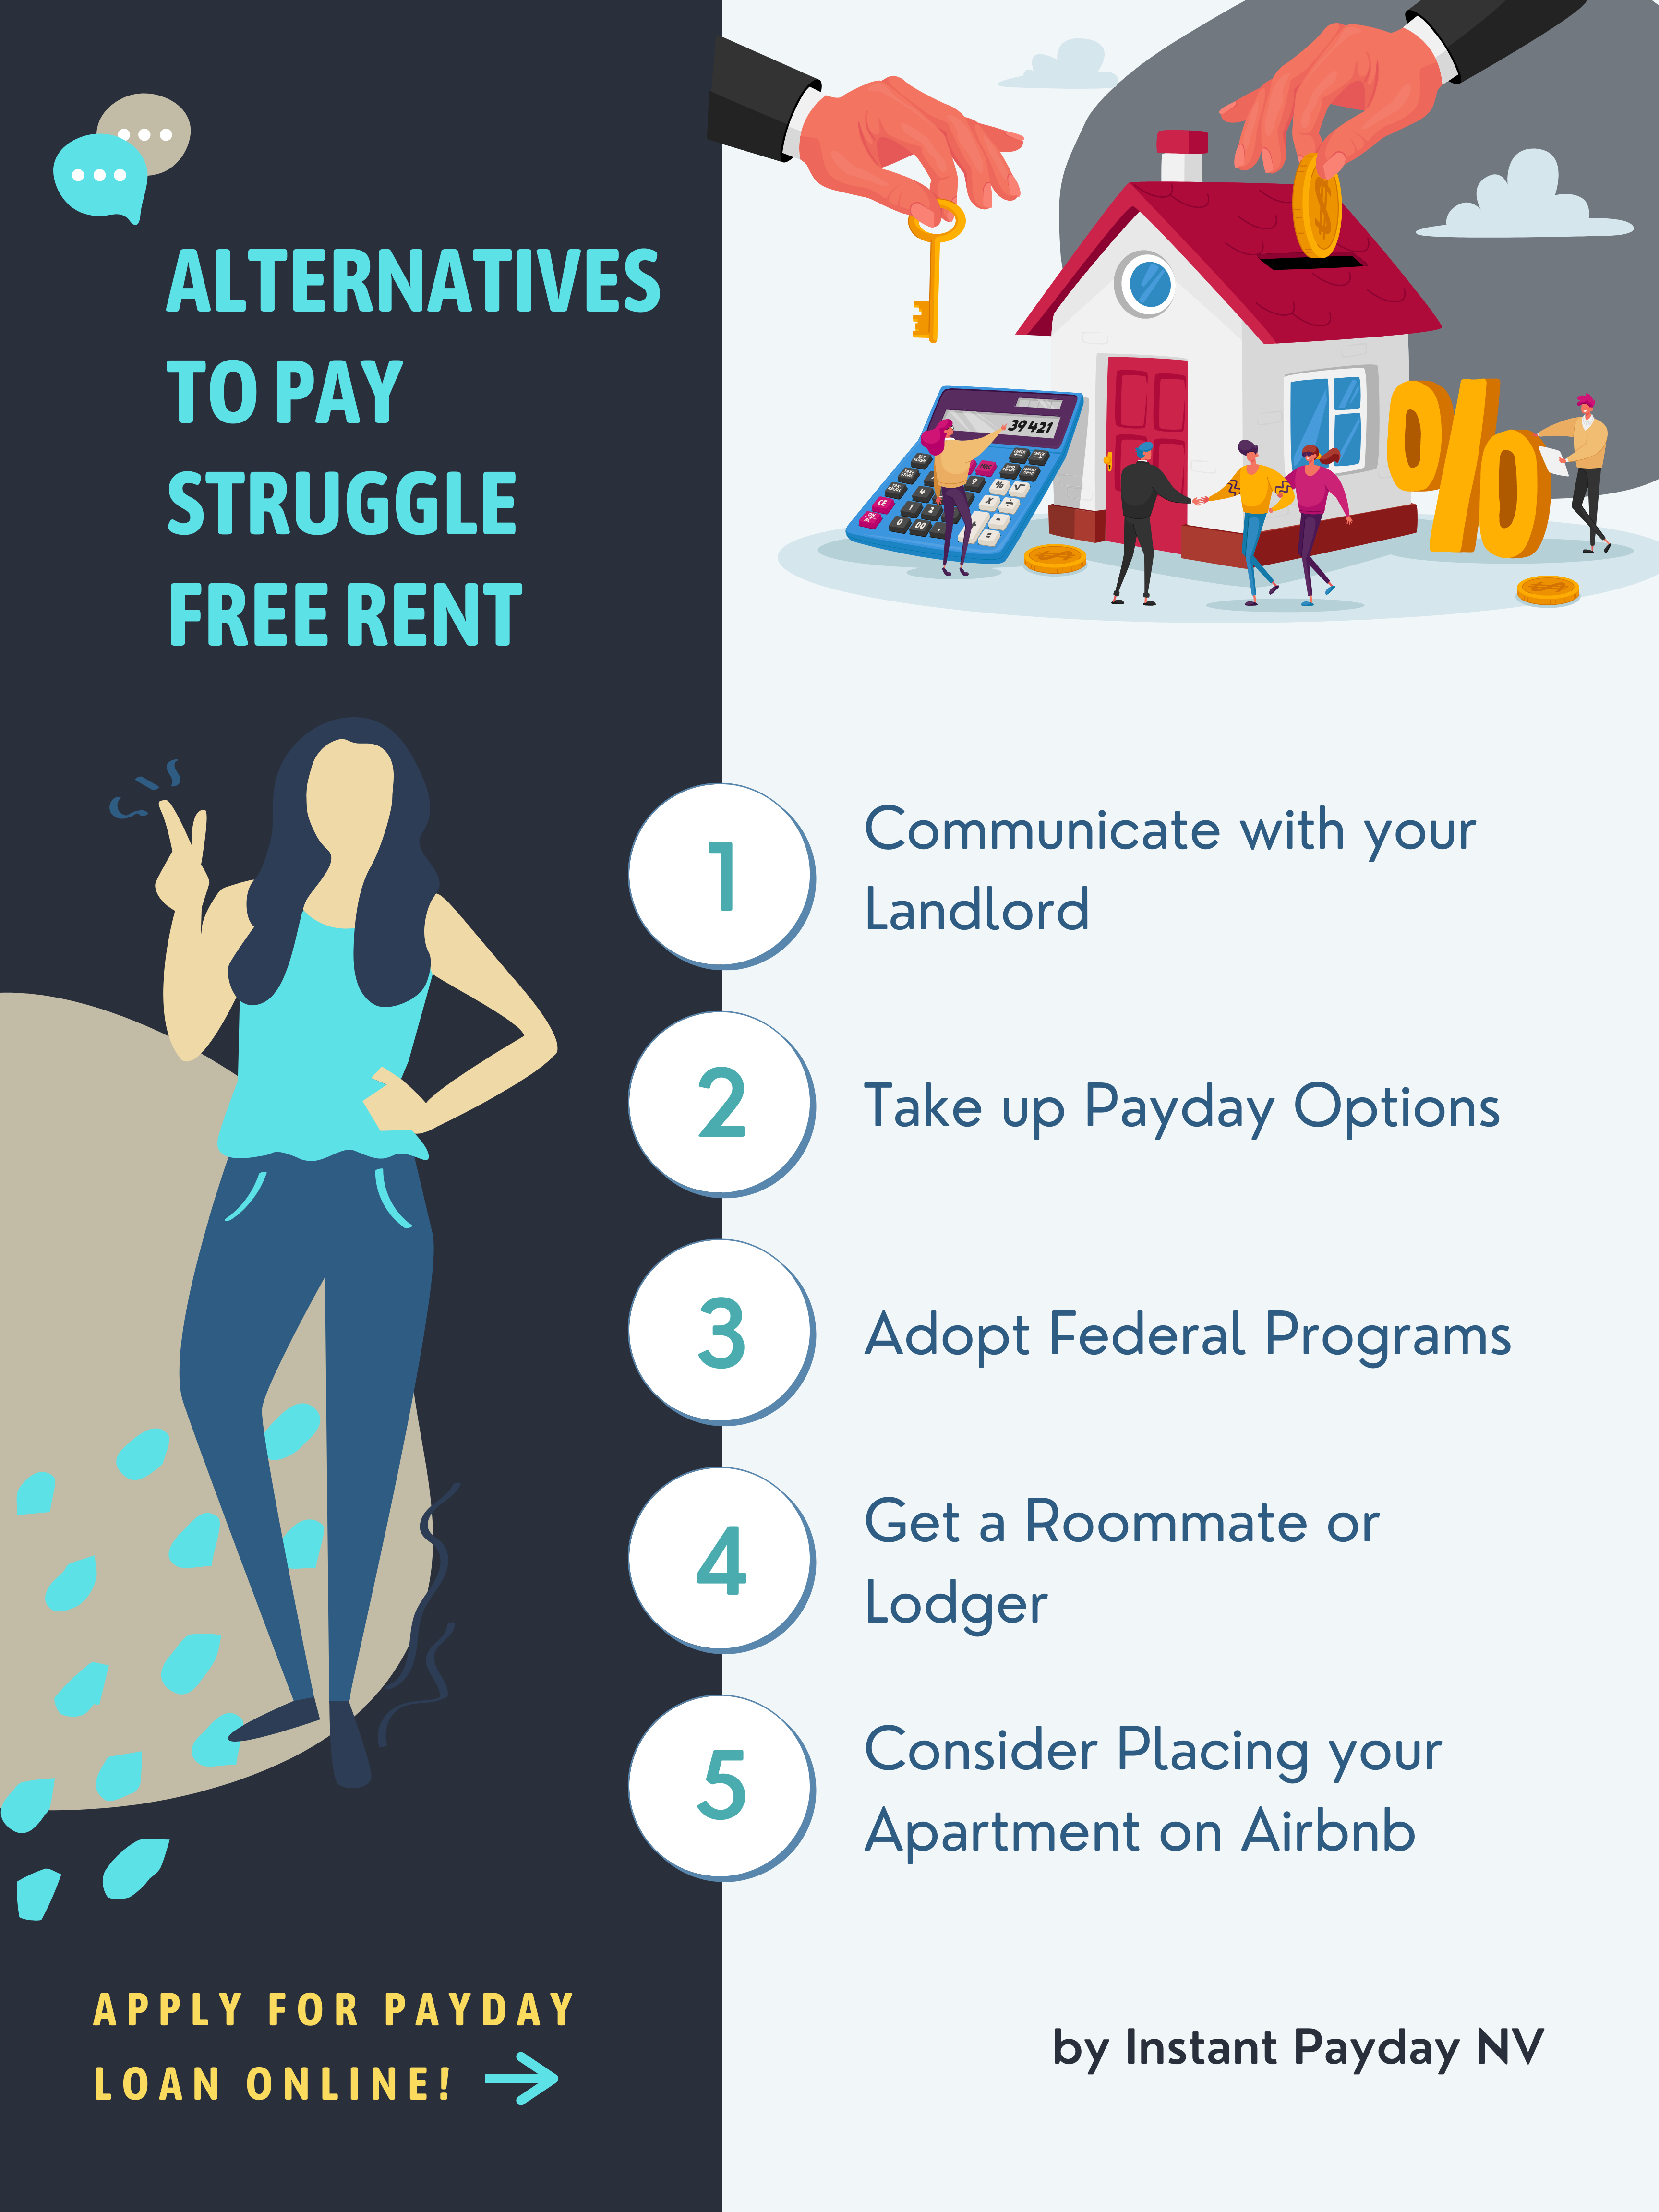 Alternatives to pay struggle free rent